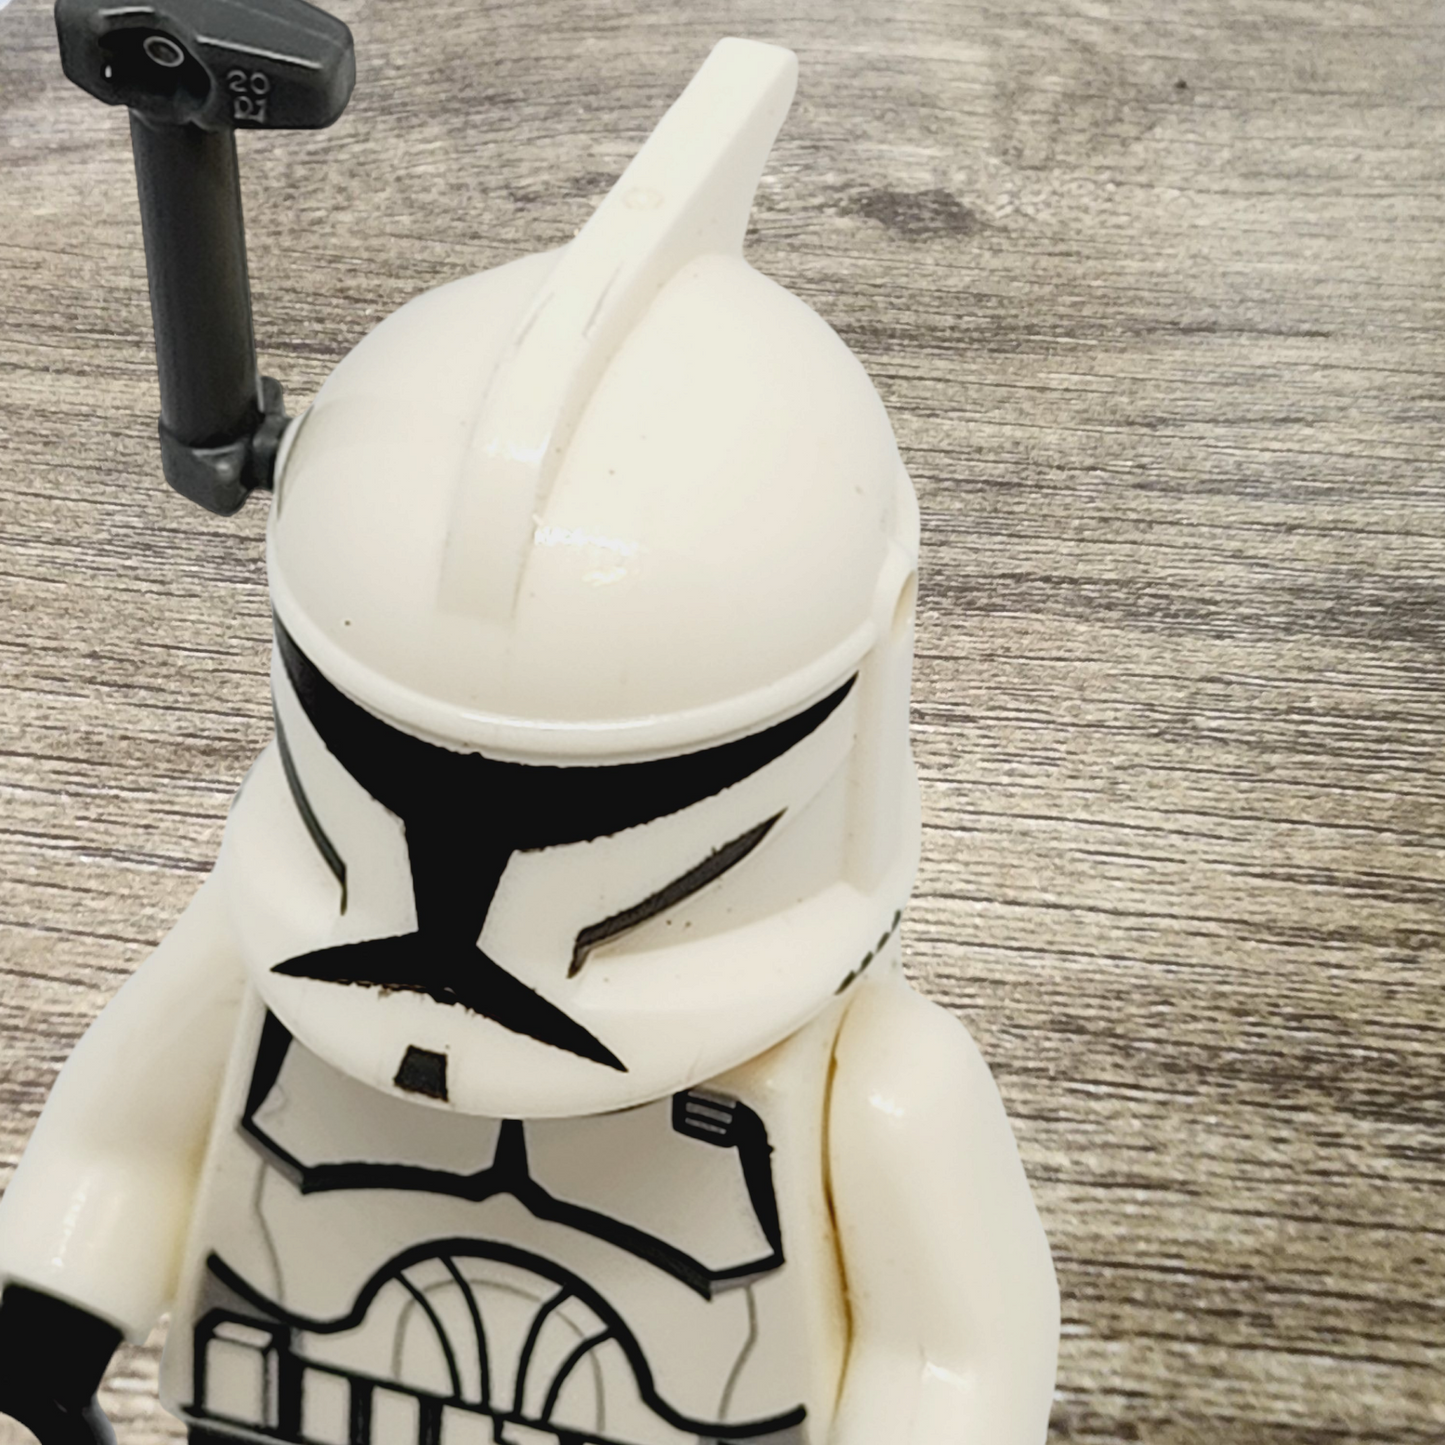 Lego Clone Trooper Phase 1 Minifigure Star Wars sw0200